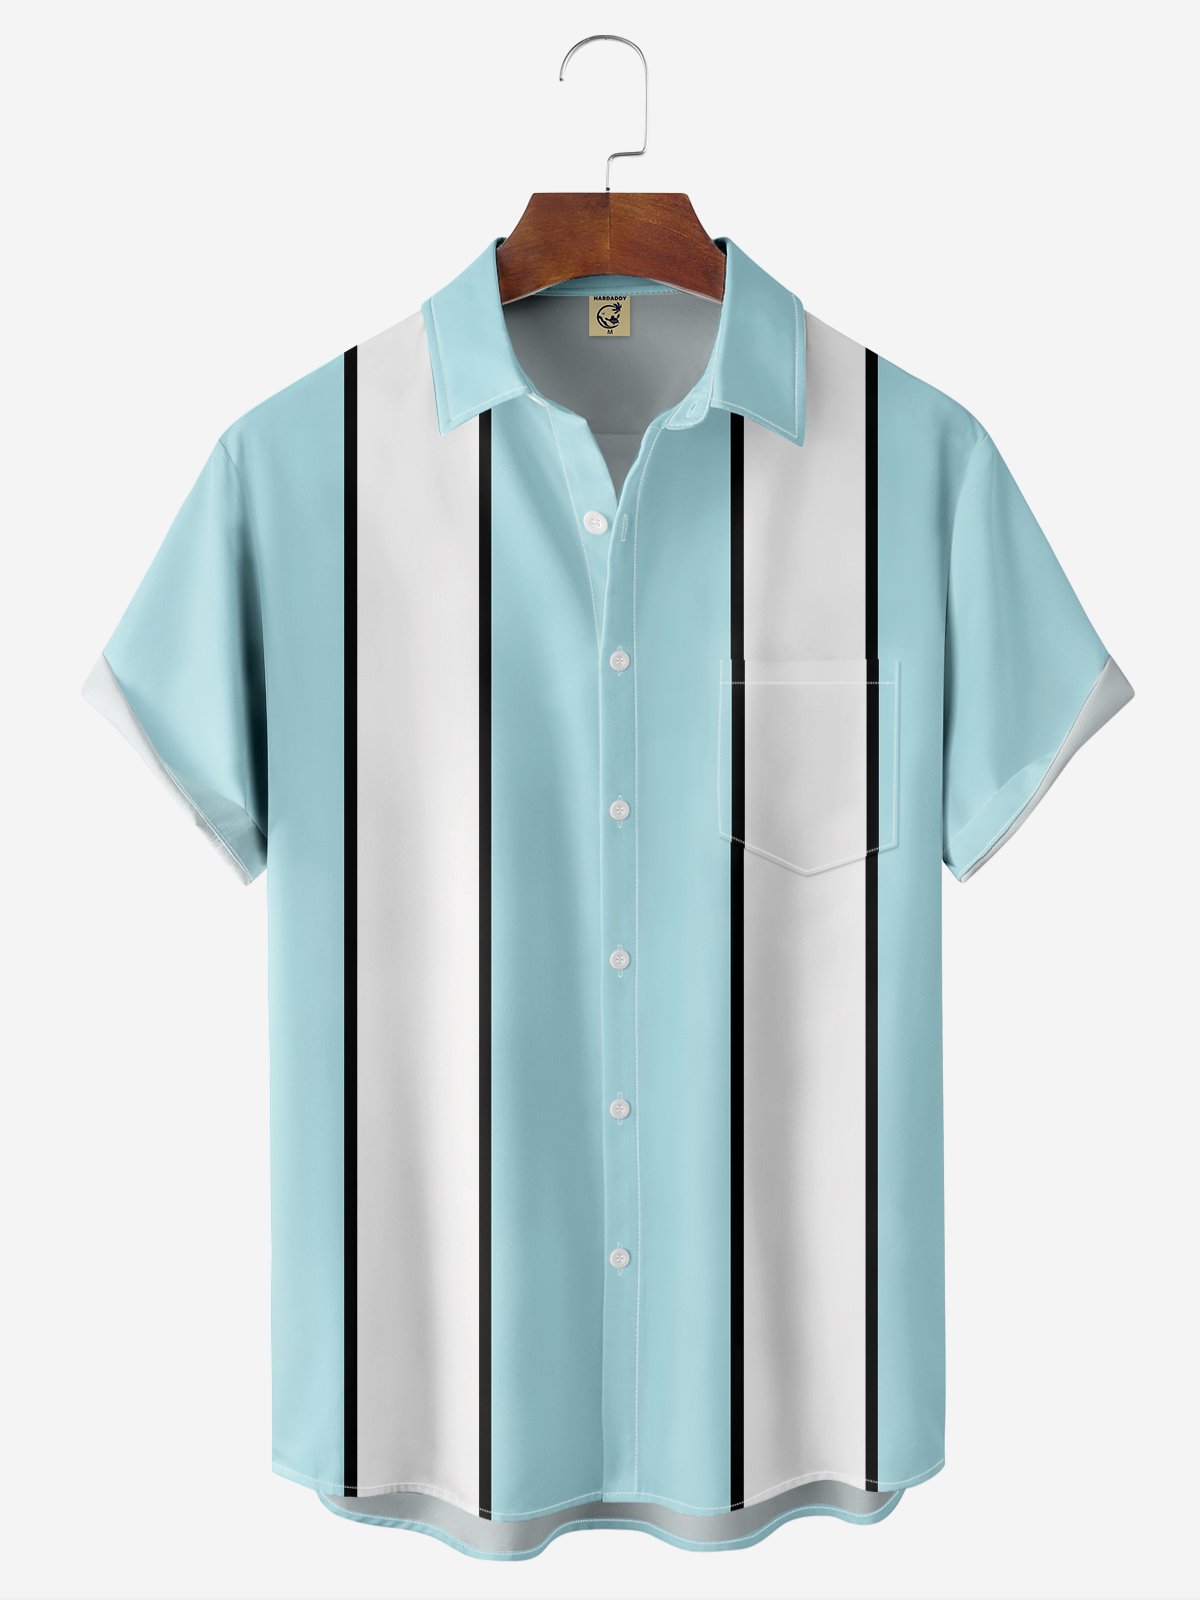 Hardaddy Moisture-wicking Geometric Chest Pocket Bowling Shirt